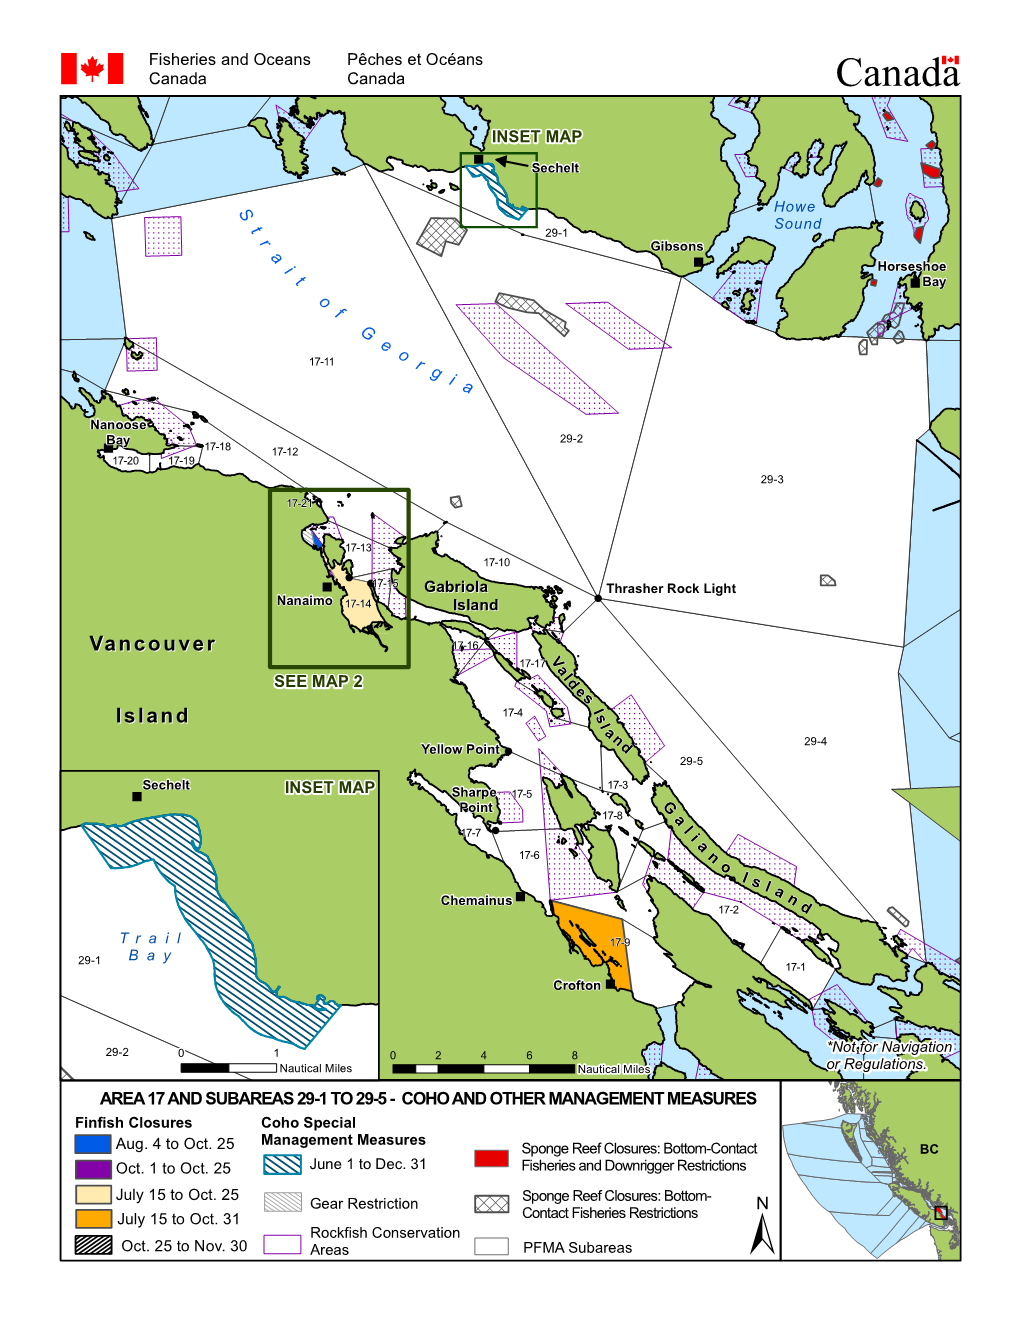 Area 17 and Subareas 29-1 to 29-5, Nanaimo, Sechelt, Strait of Georgia